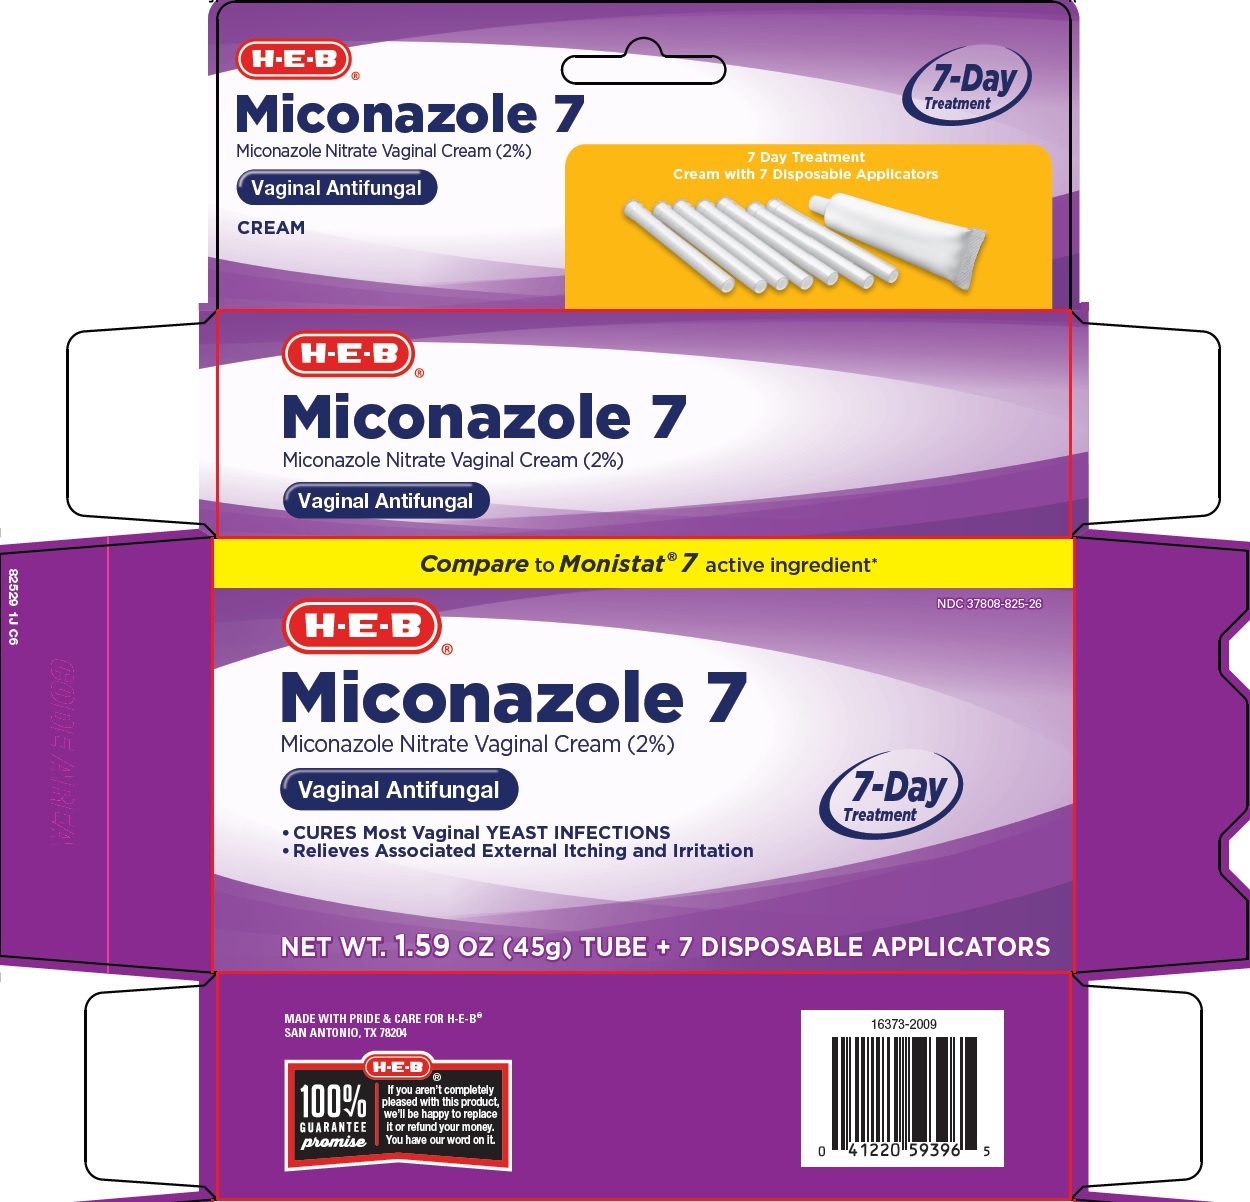 825-1j-miconazole-7-1